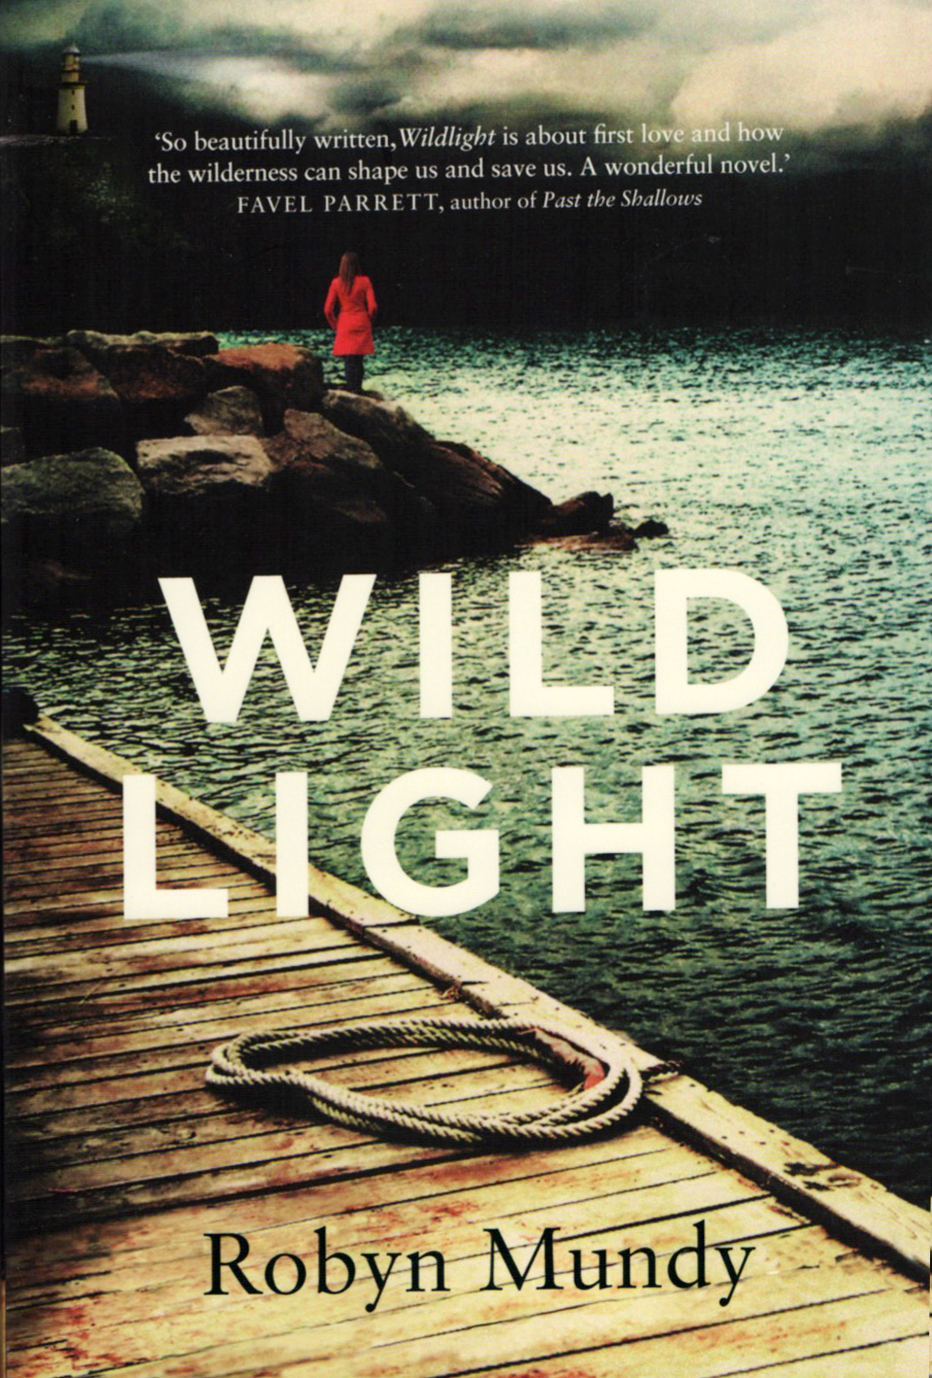 Wild Light